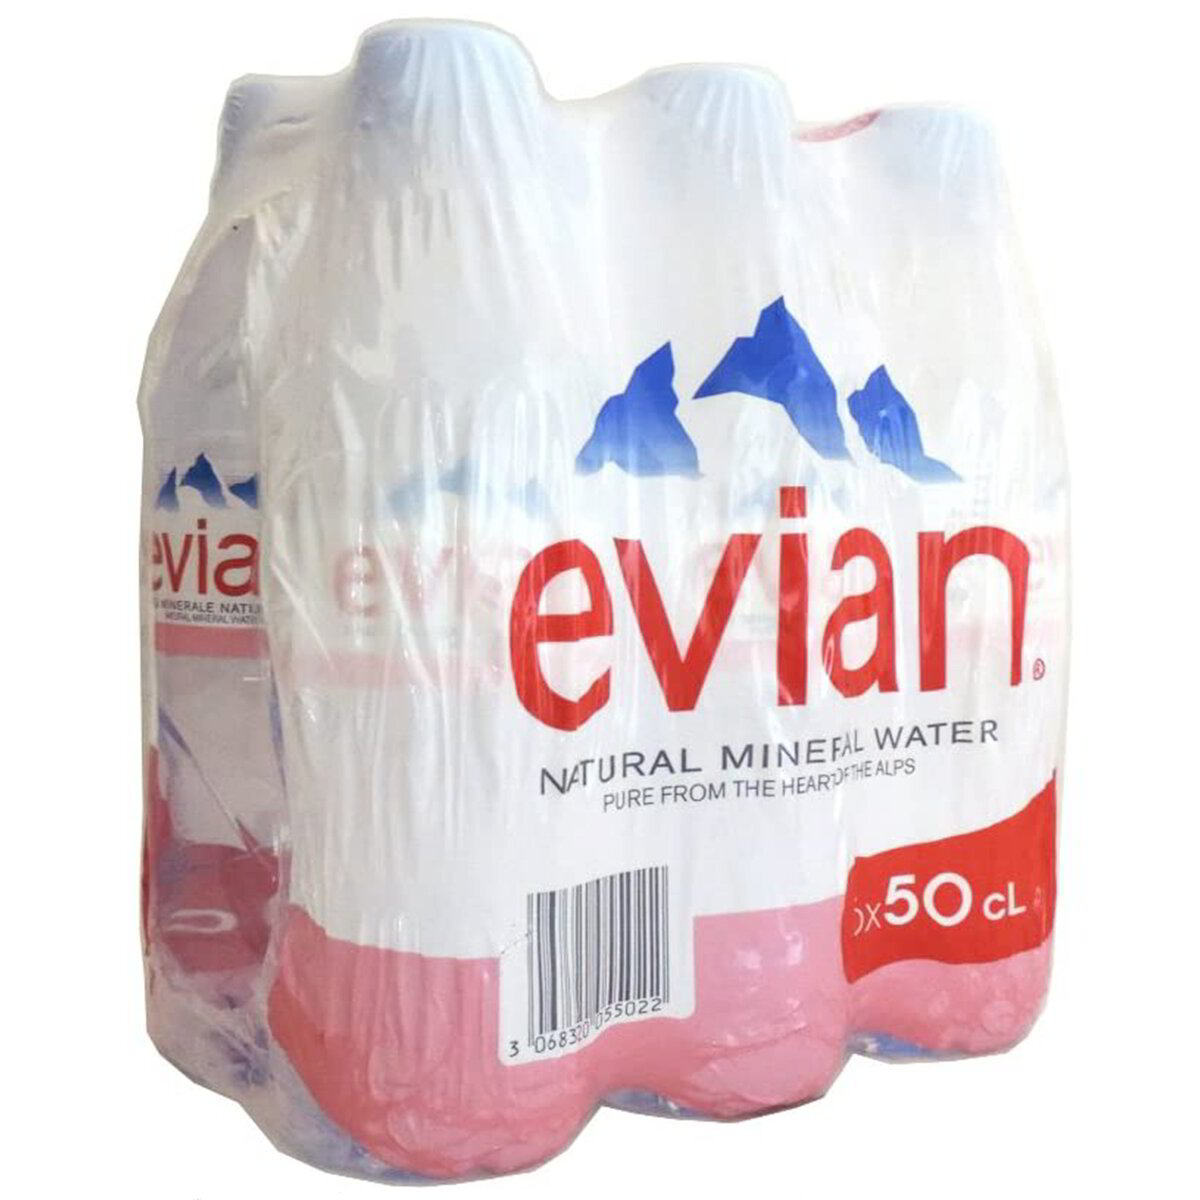 Evian 1/2 Liter petflessen x 6 st. 4.50€.